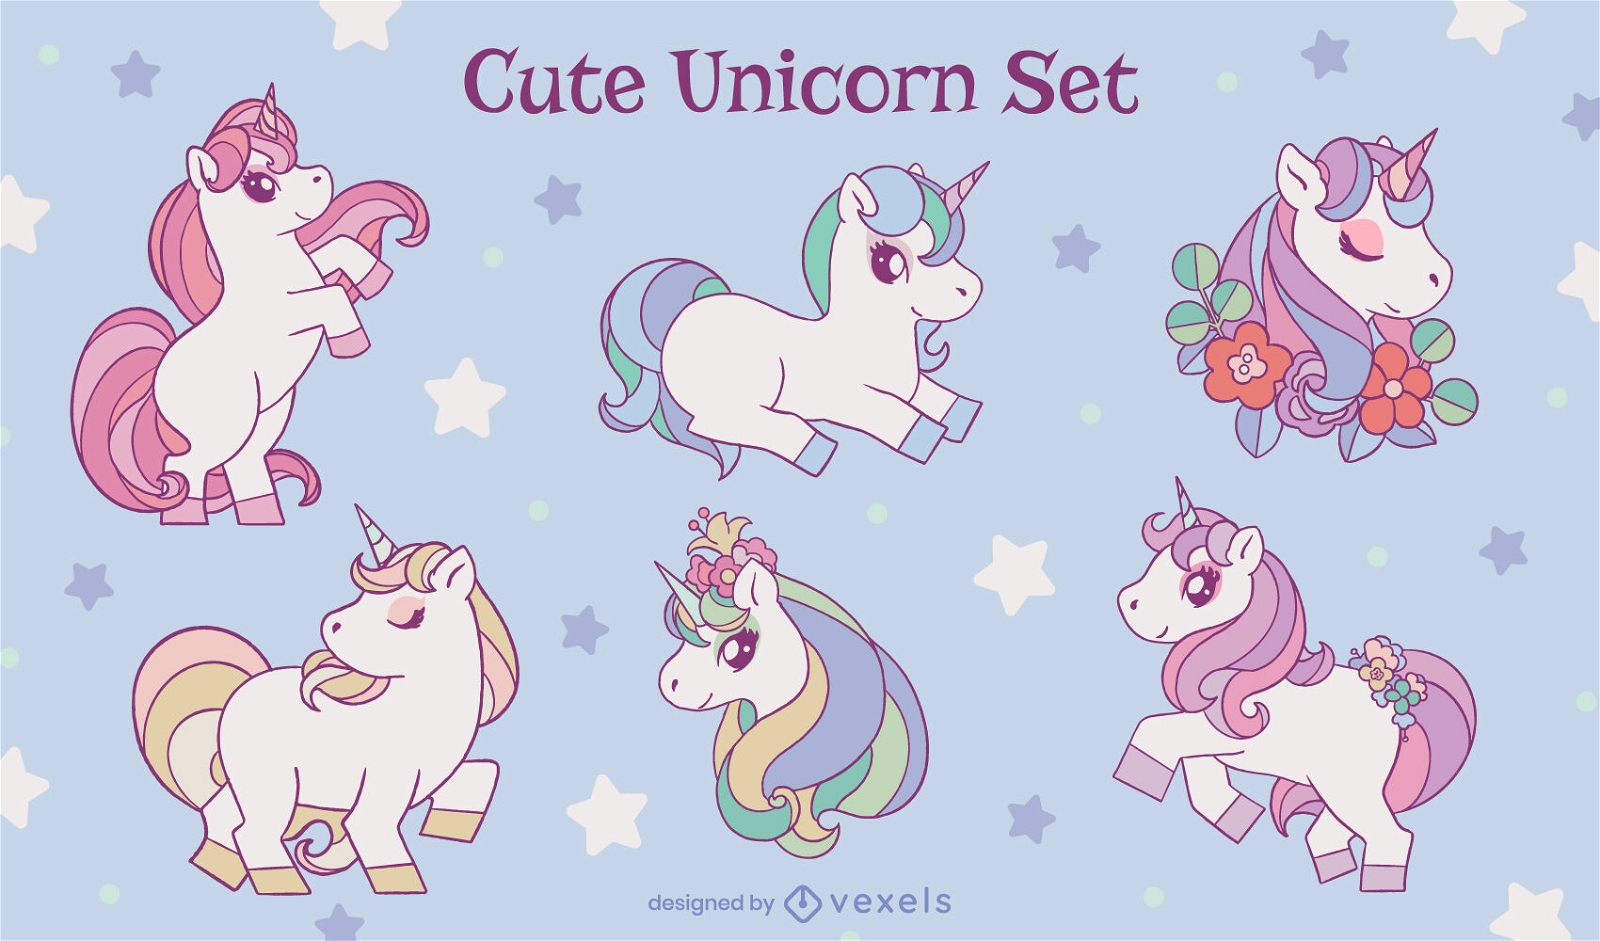 Cute magic unicorn character set